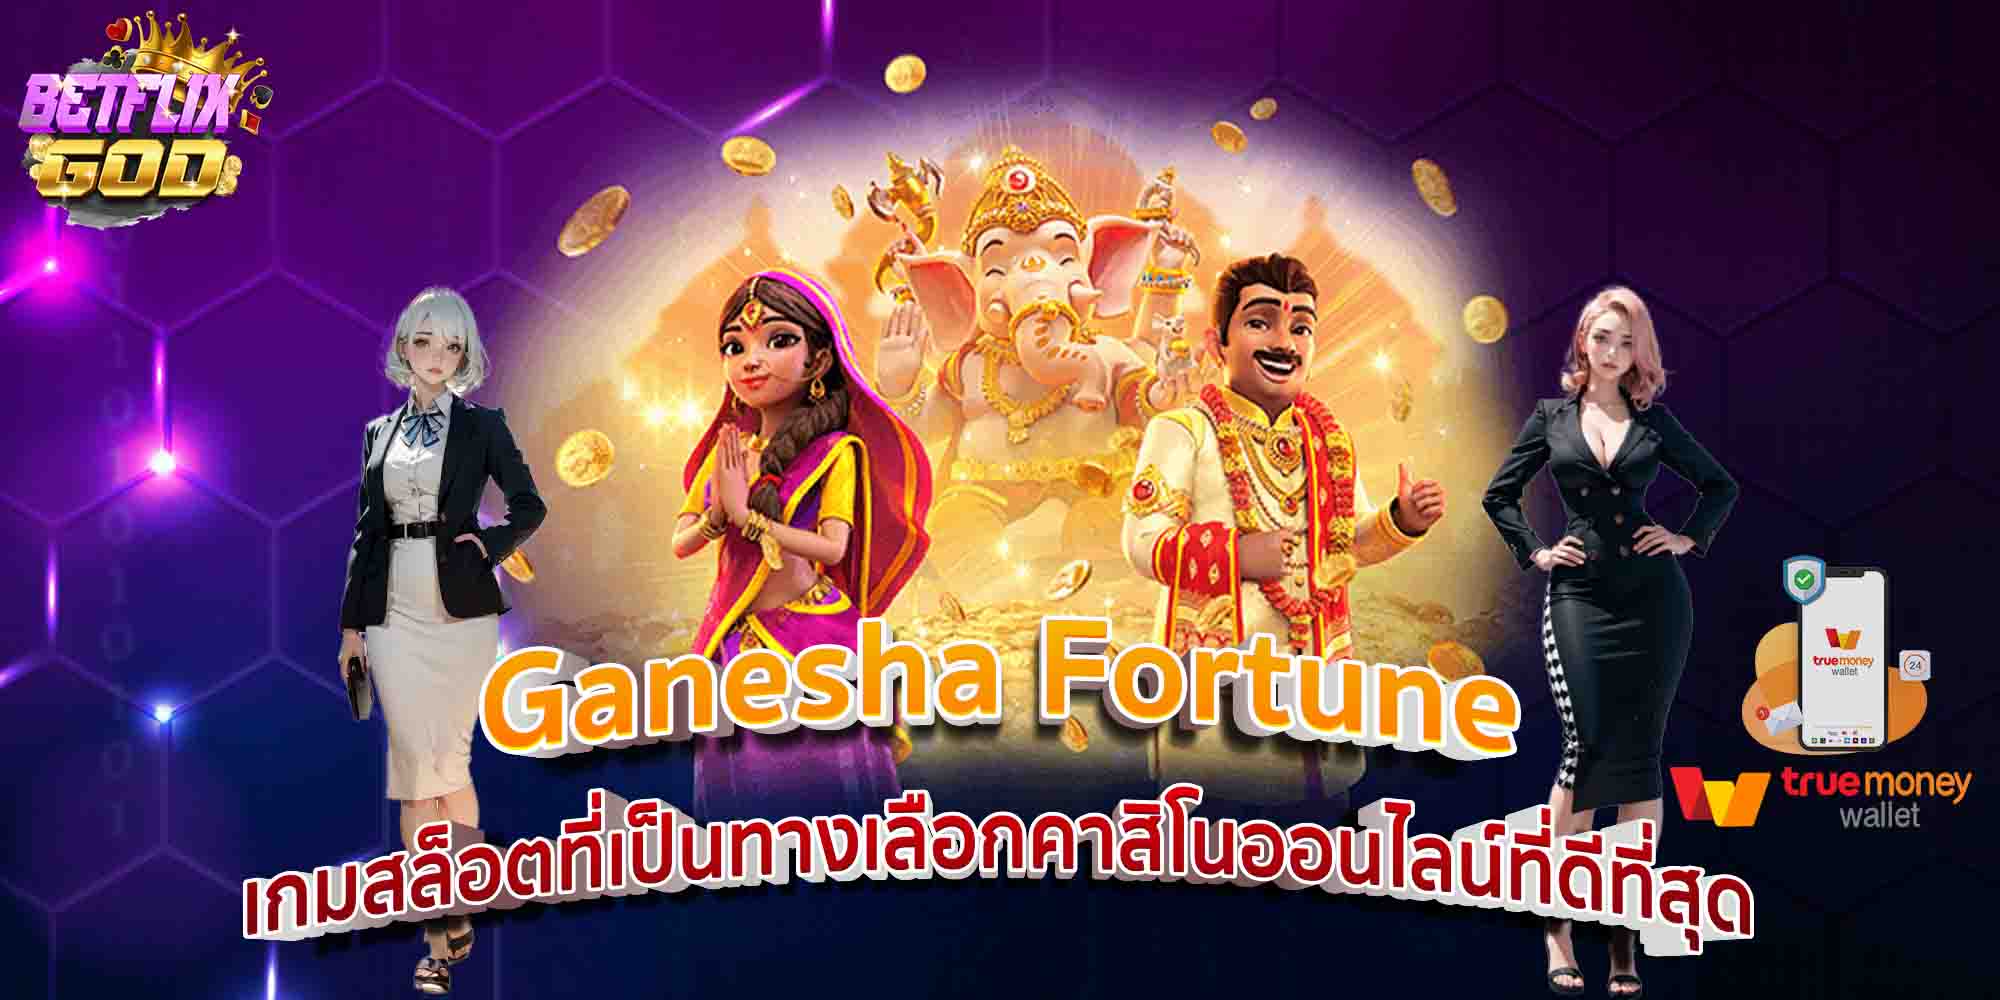 Ganesha Fortune เกมสล็อตที่เป็นทางเลือกคาสิโนออนไลน์ที่ดีที่สุด